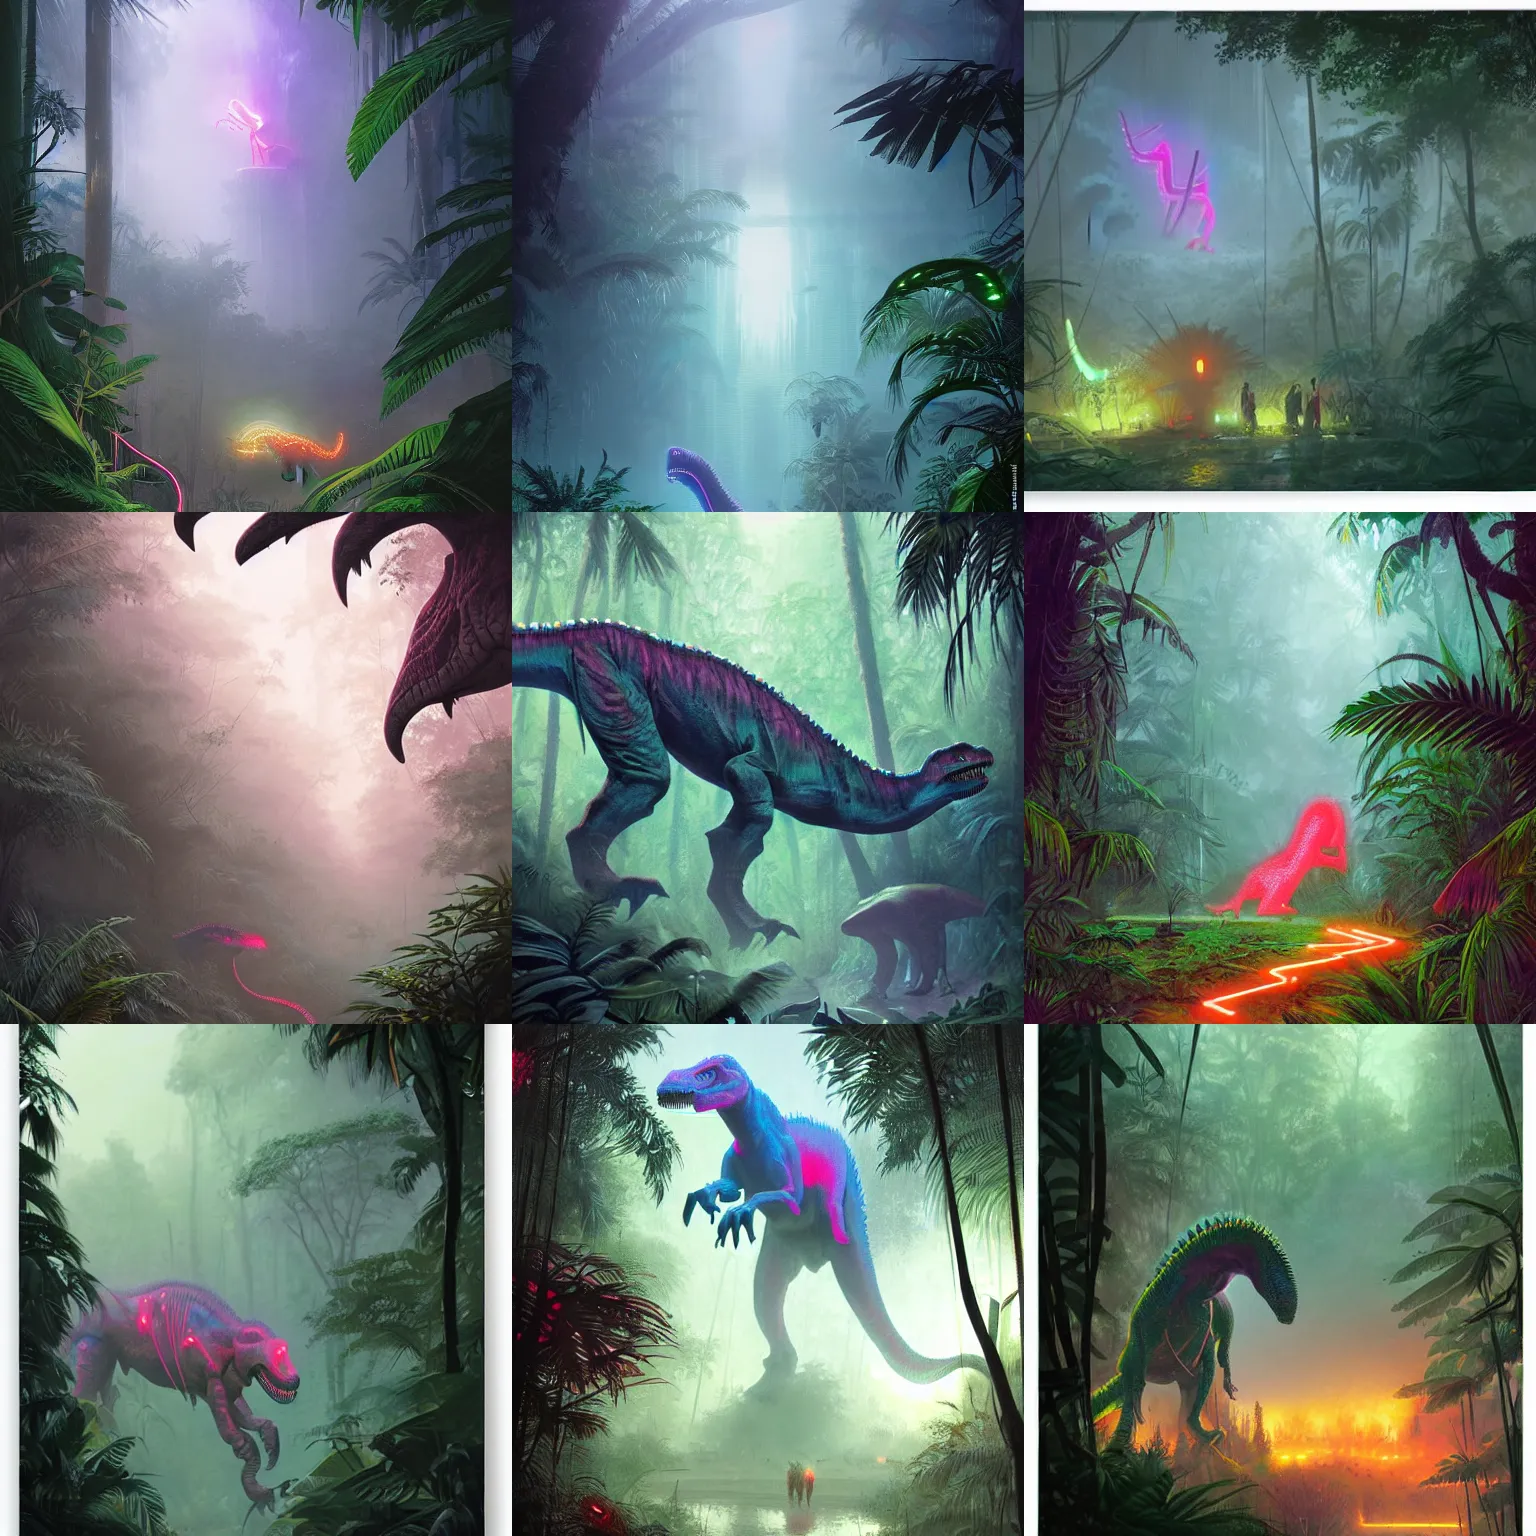 Prompt: neon dinosaur in a foggy jungle by magali villeneuve and greg rutkowski